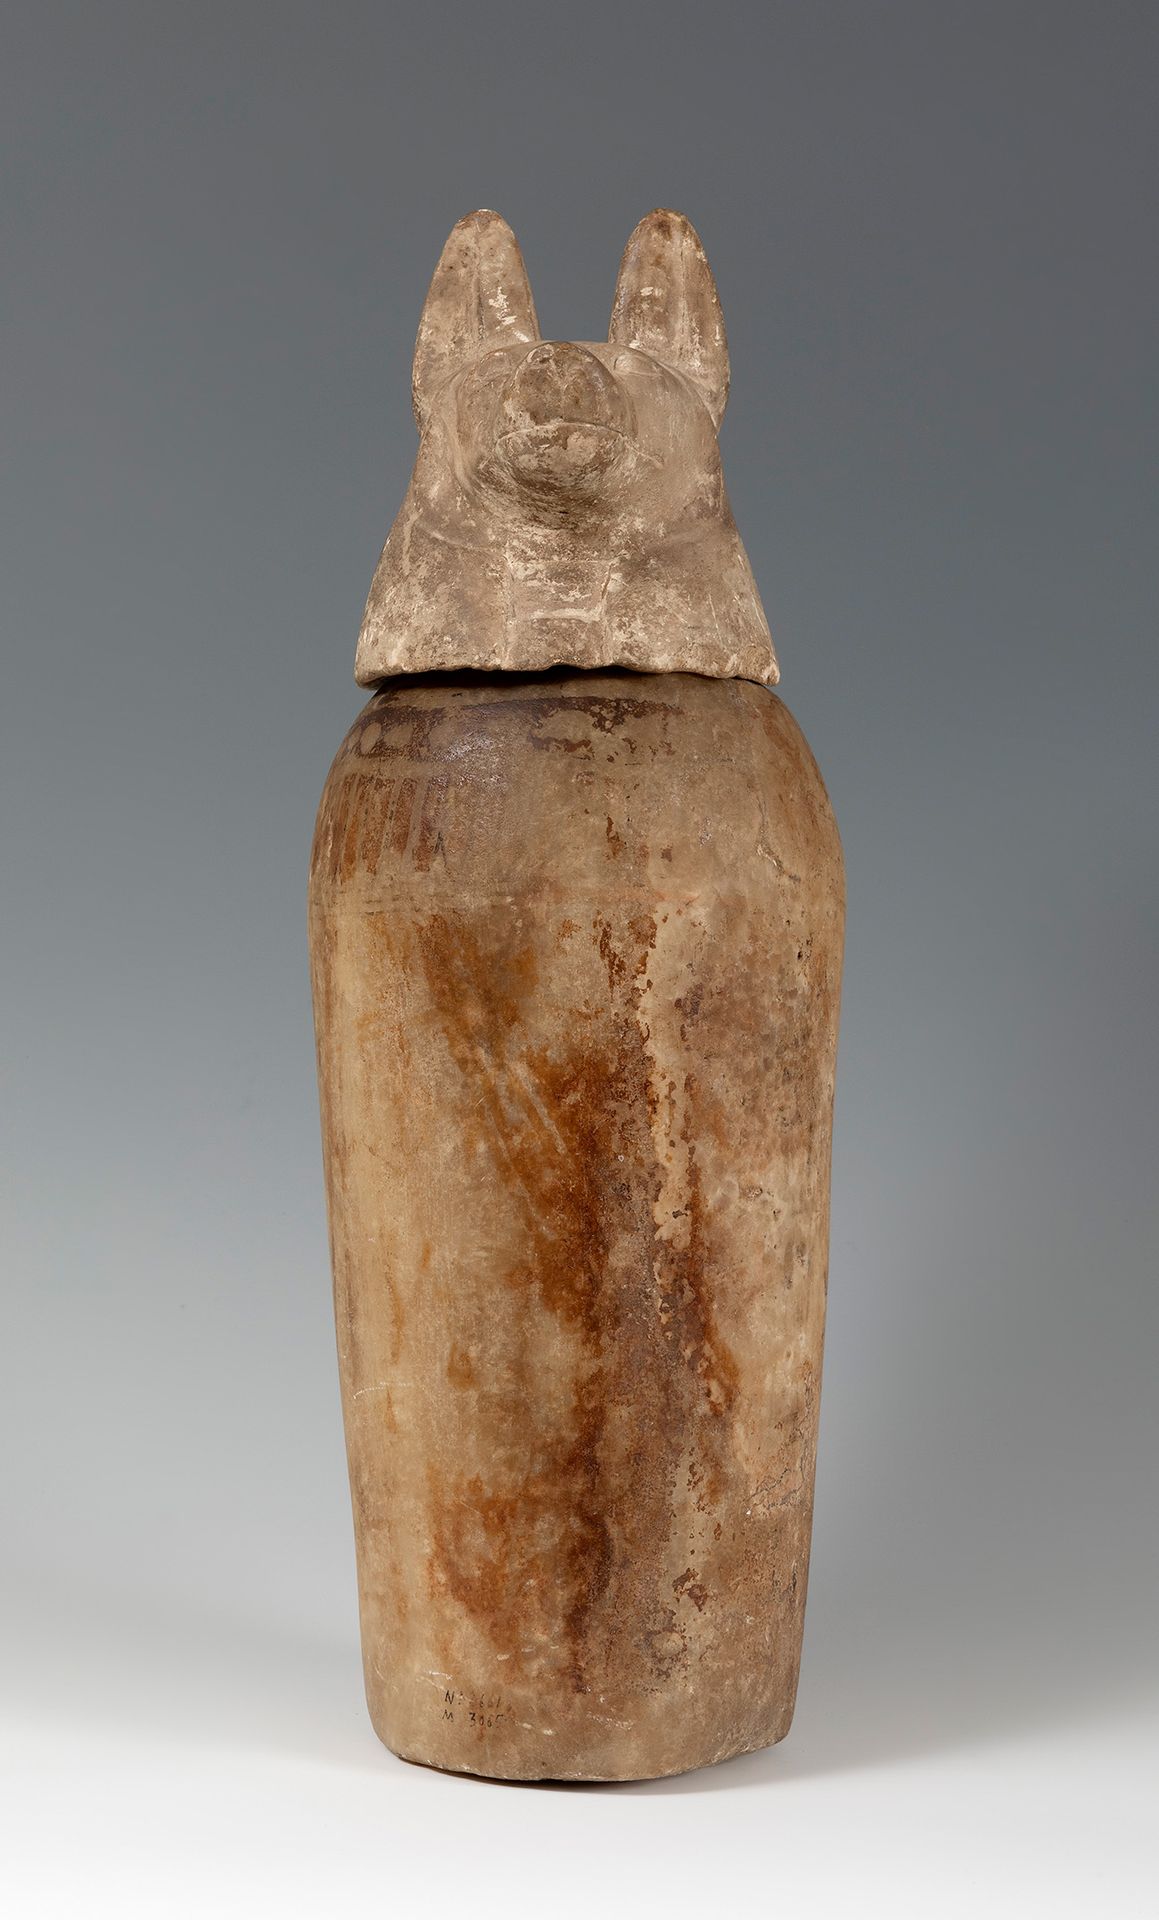 Null Duamutef罐式花瓶；埃及，新王国/Saita时期，公元前1200-664年。
石膏和石灰石。
由于时间的流逝而造成的损坏。
出处：法国私人收藏。&hellip;